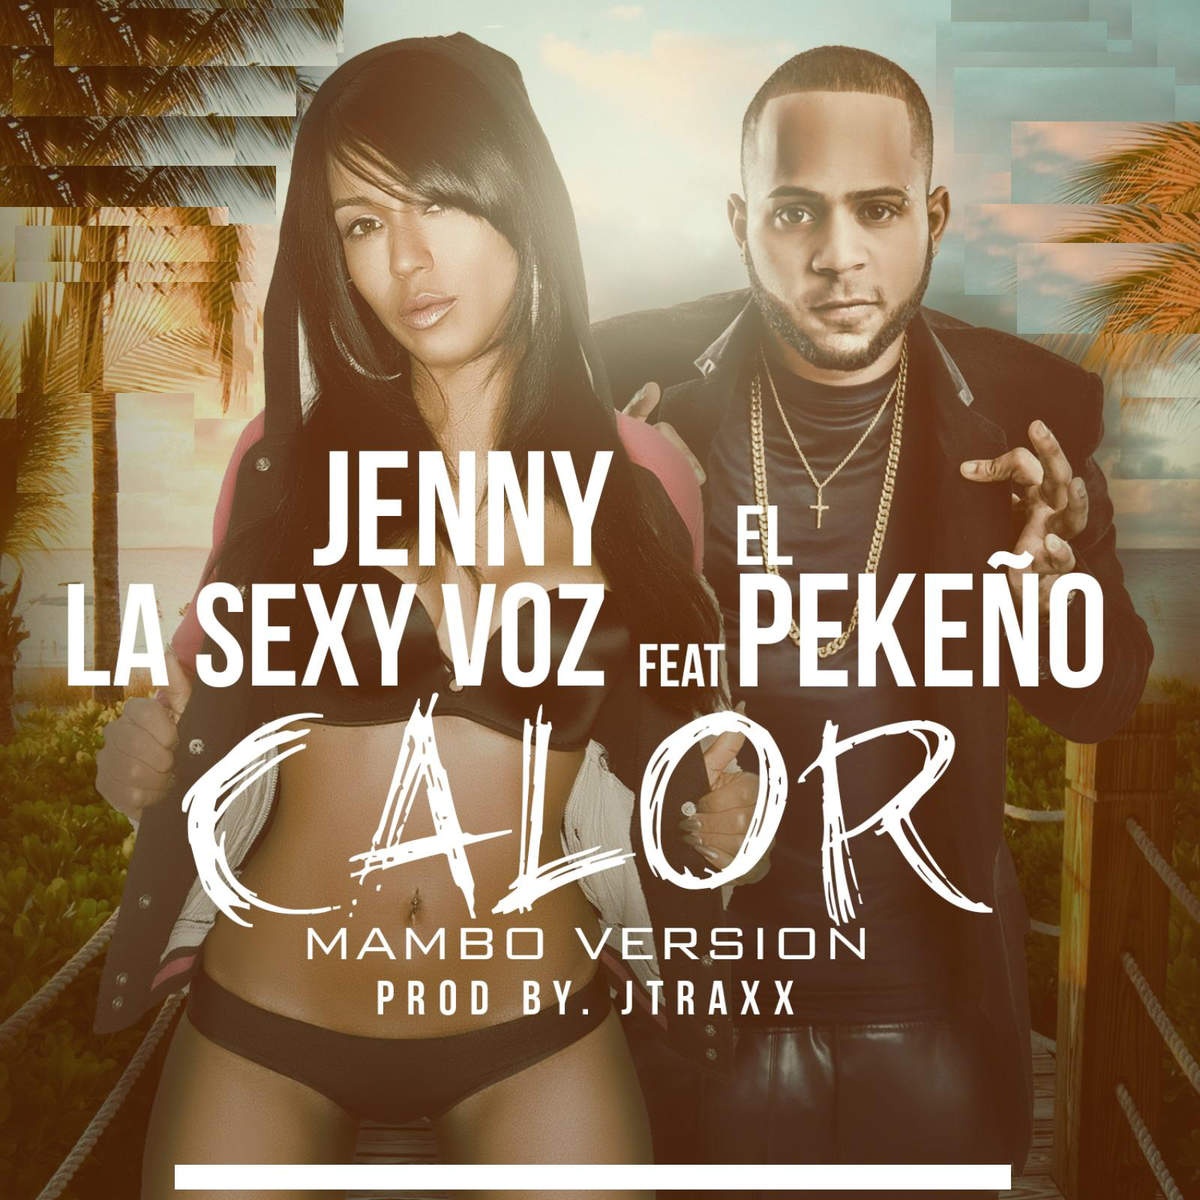 Calor (Mambo Remix) 